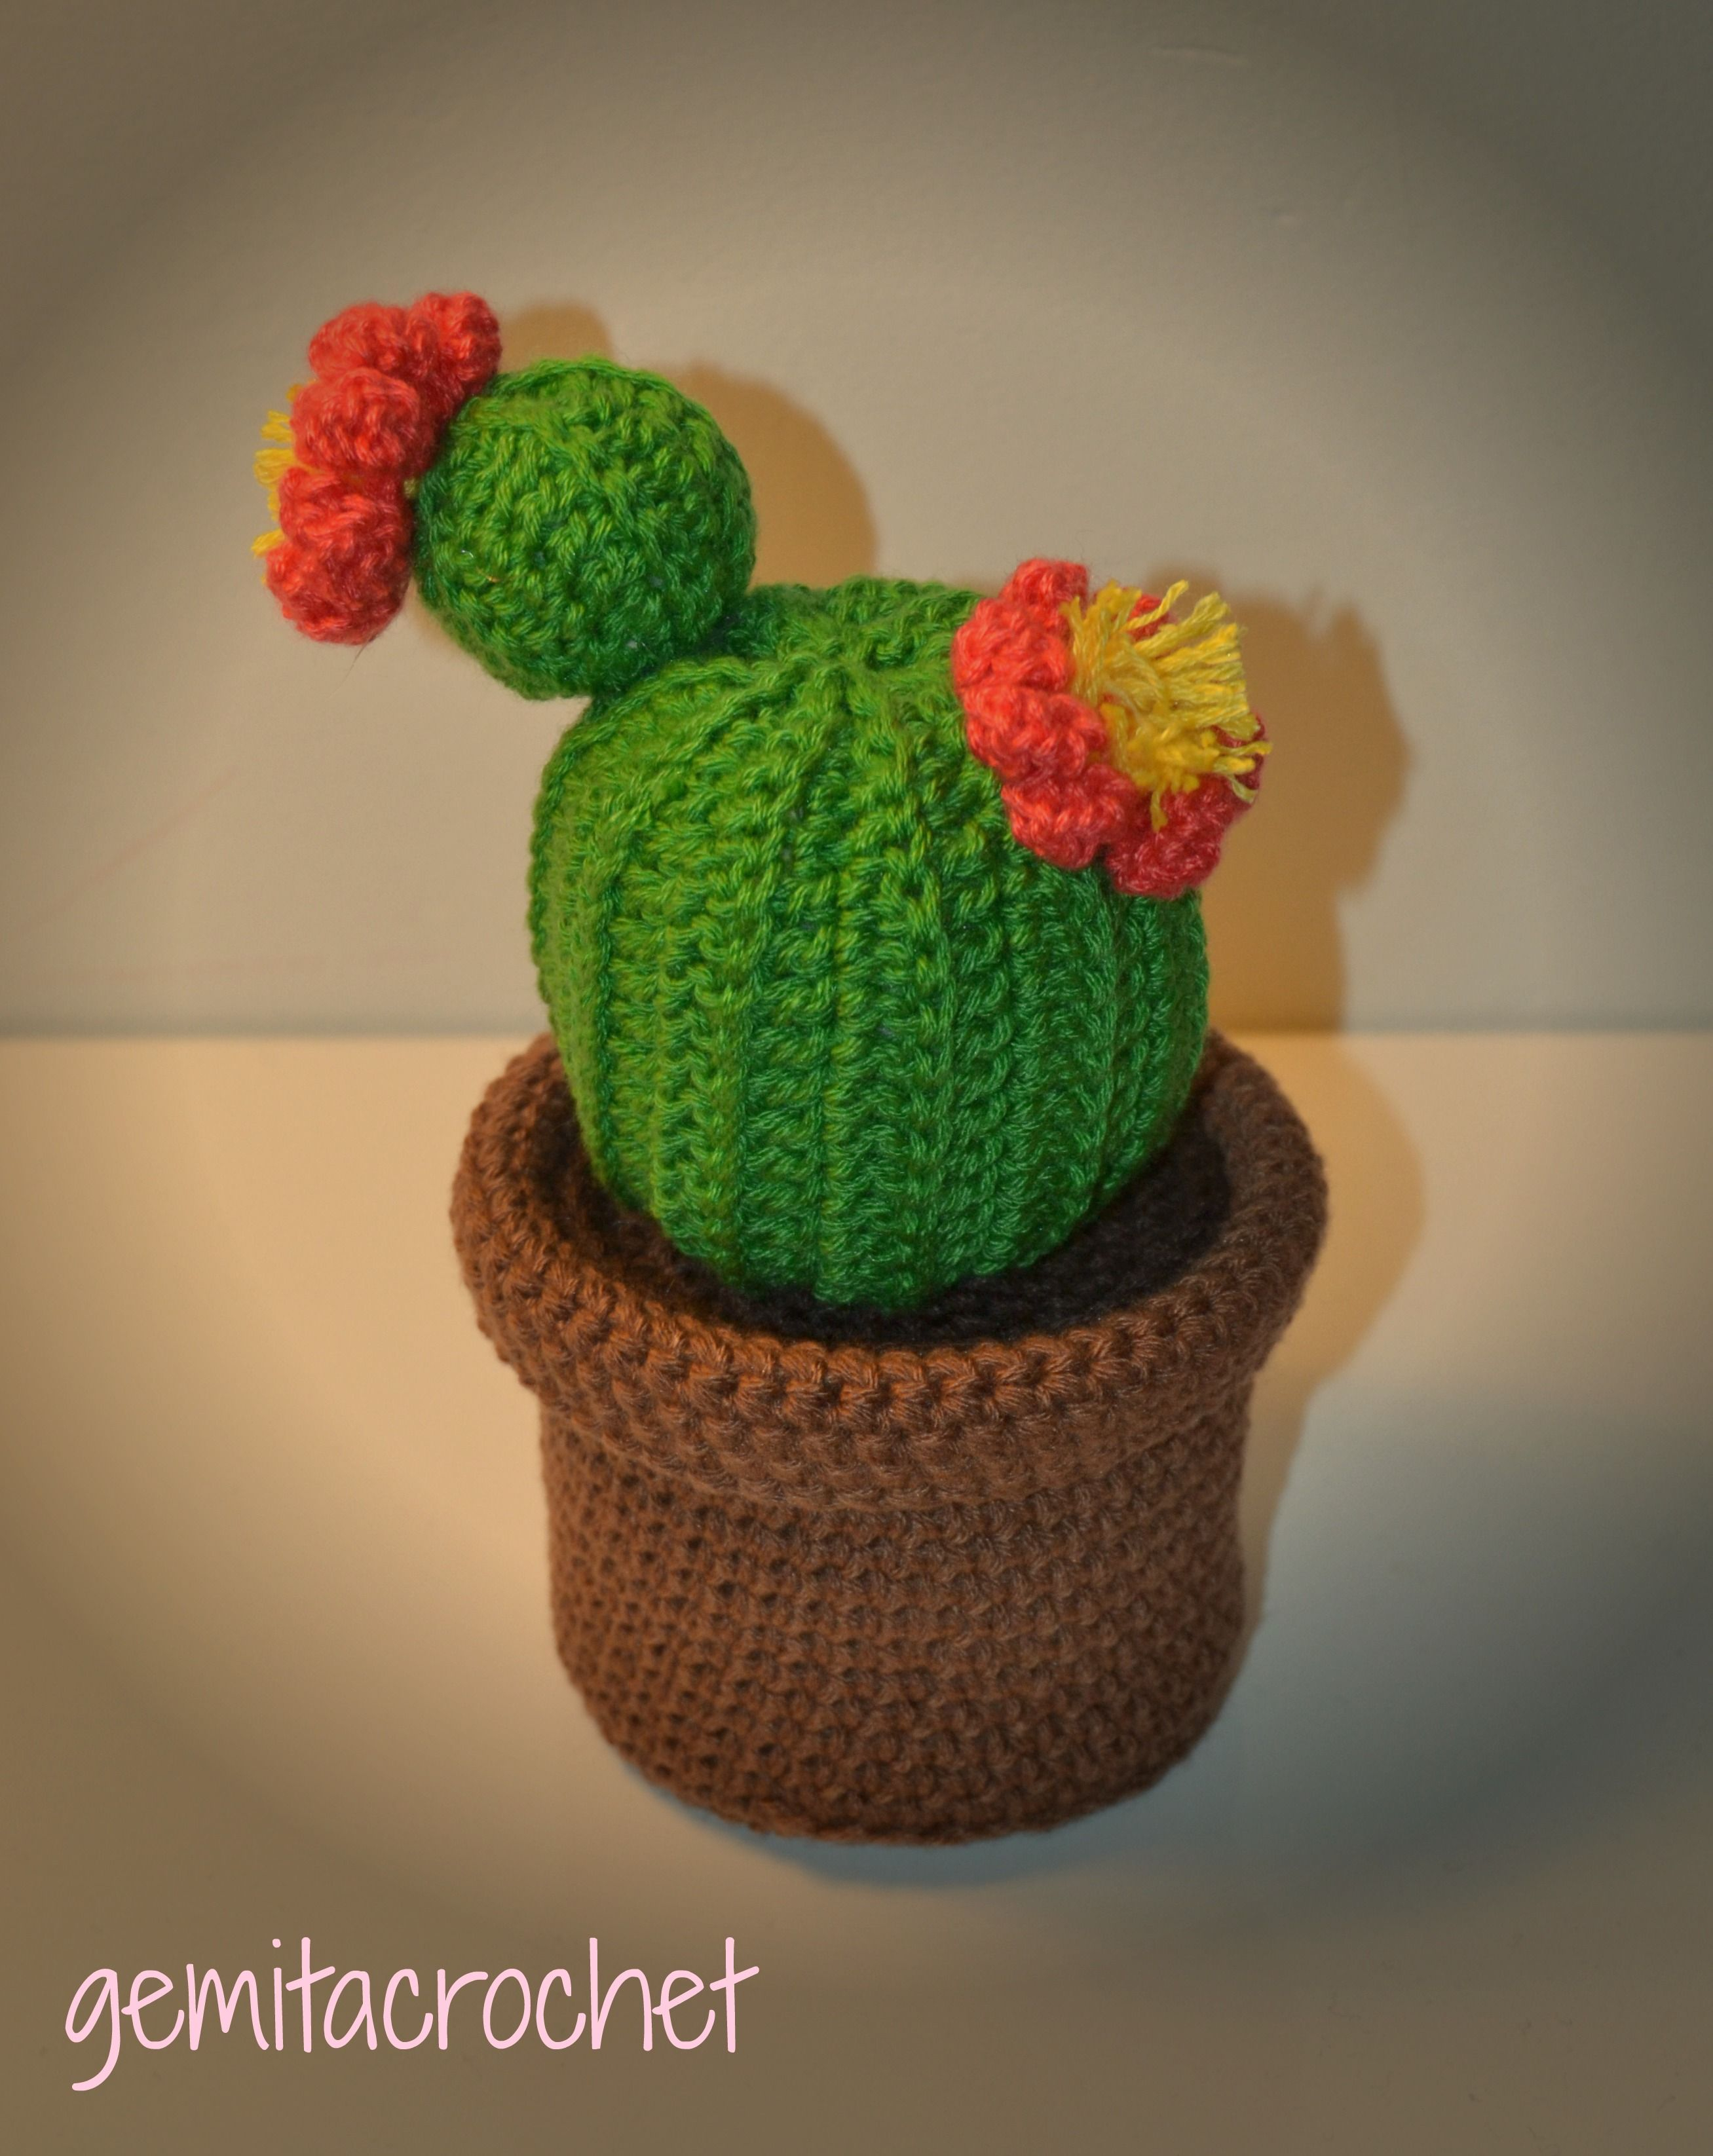 Crochet Cactus Pattern Cactus De Crochet Pinterest Crochet Cactus Crochet